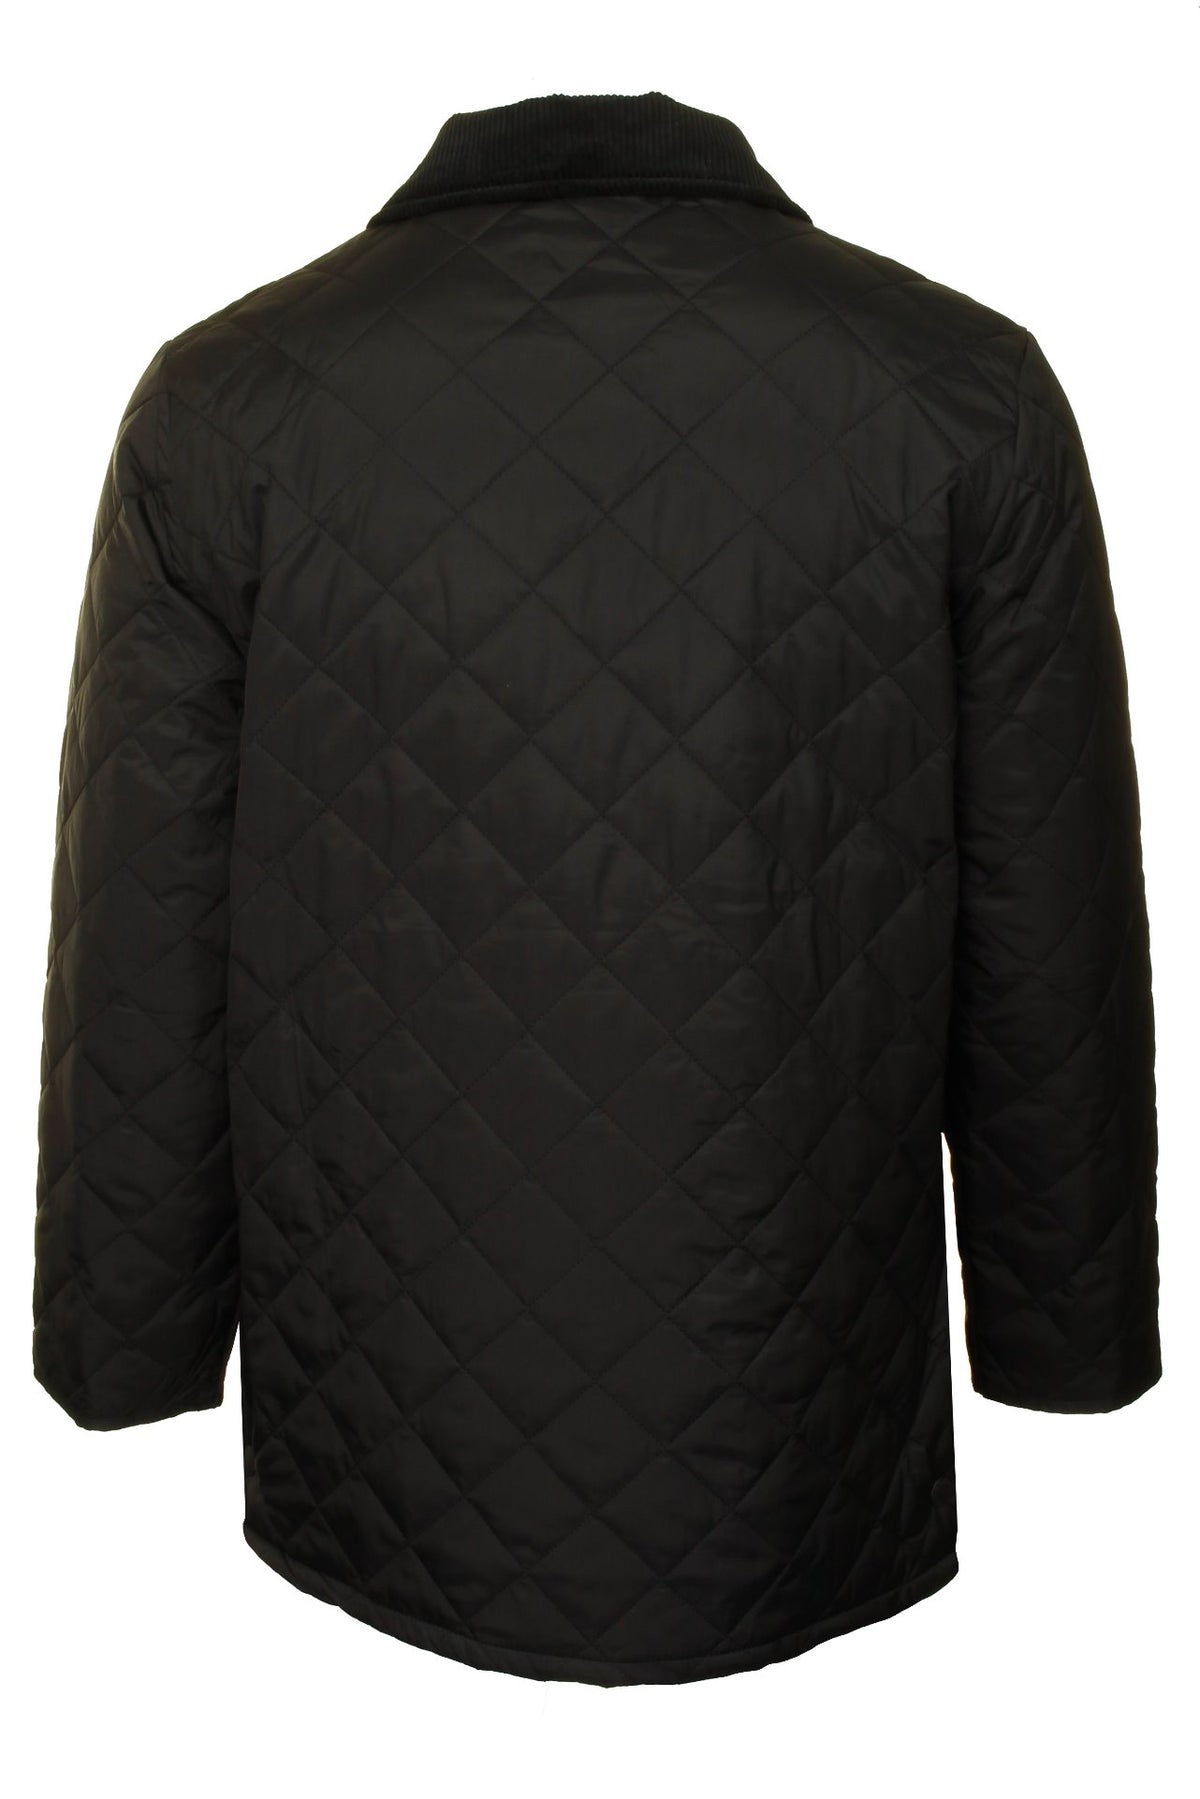 Barbour Men's Liddesdale Quilted Jacket, 04, Mqu0001, Black